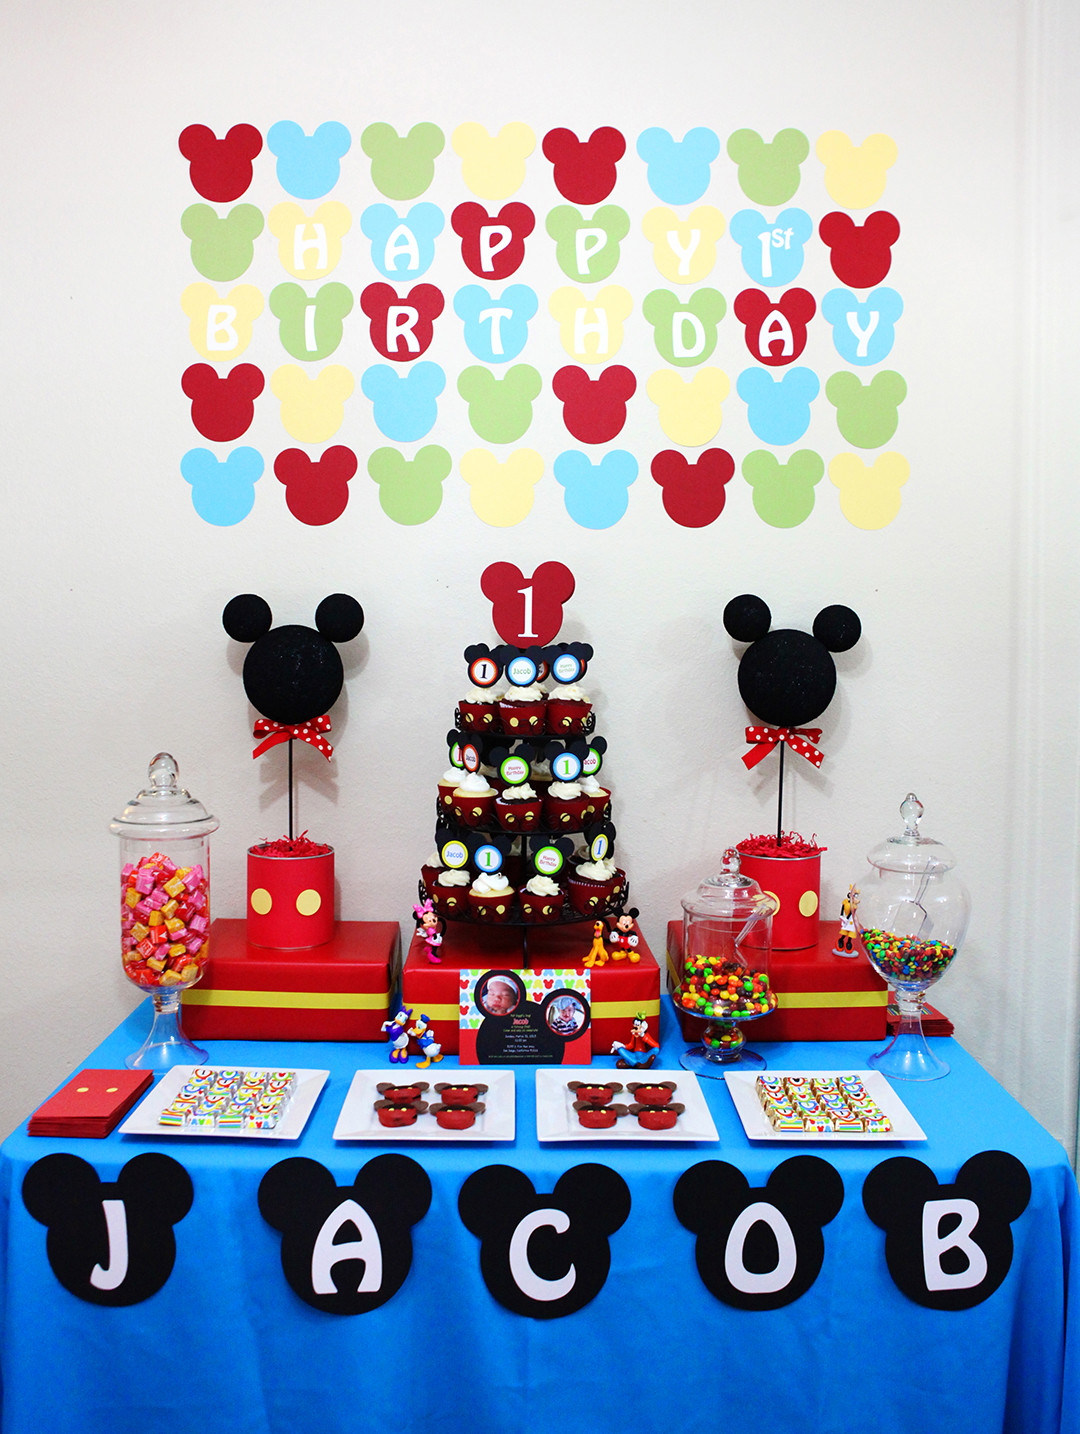 Mickey Birthday Party Ideas
 Invitation Parlour Mickey Mouse Birthday Party